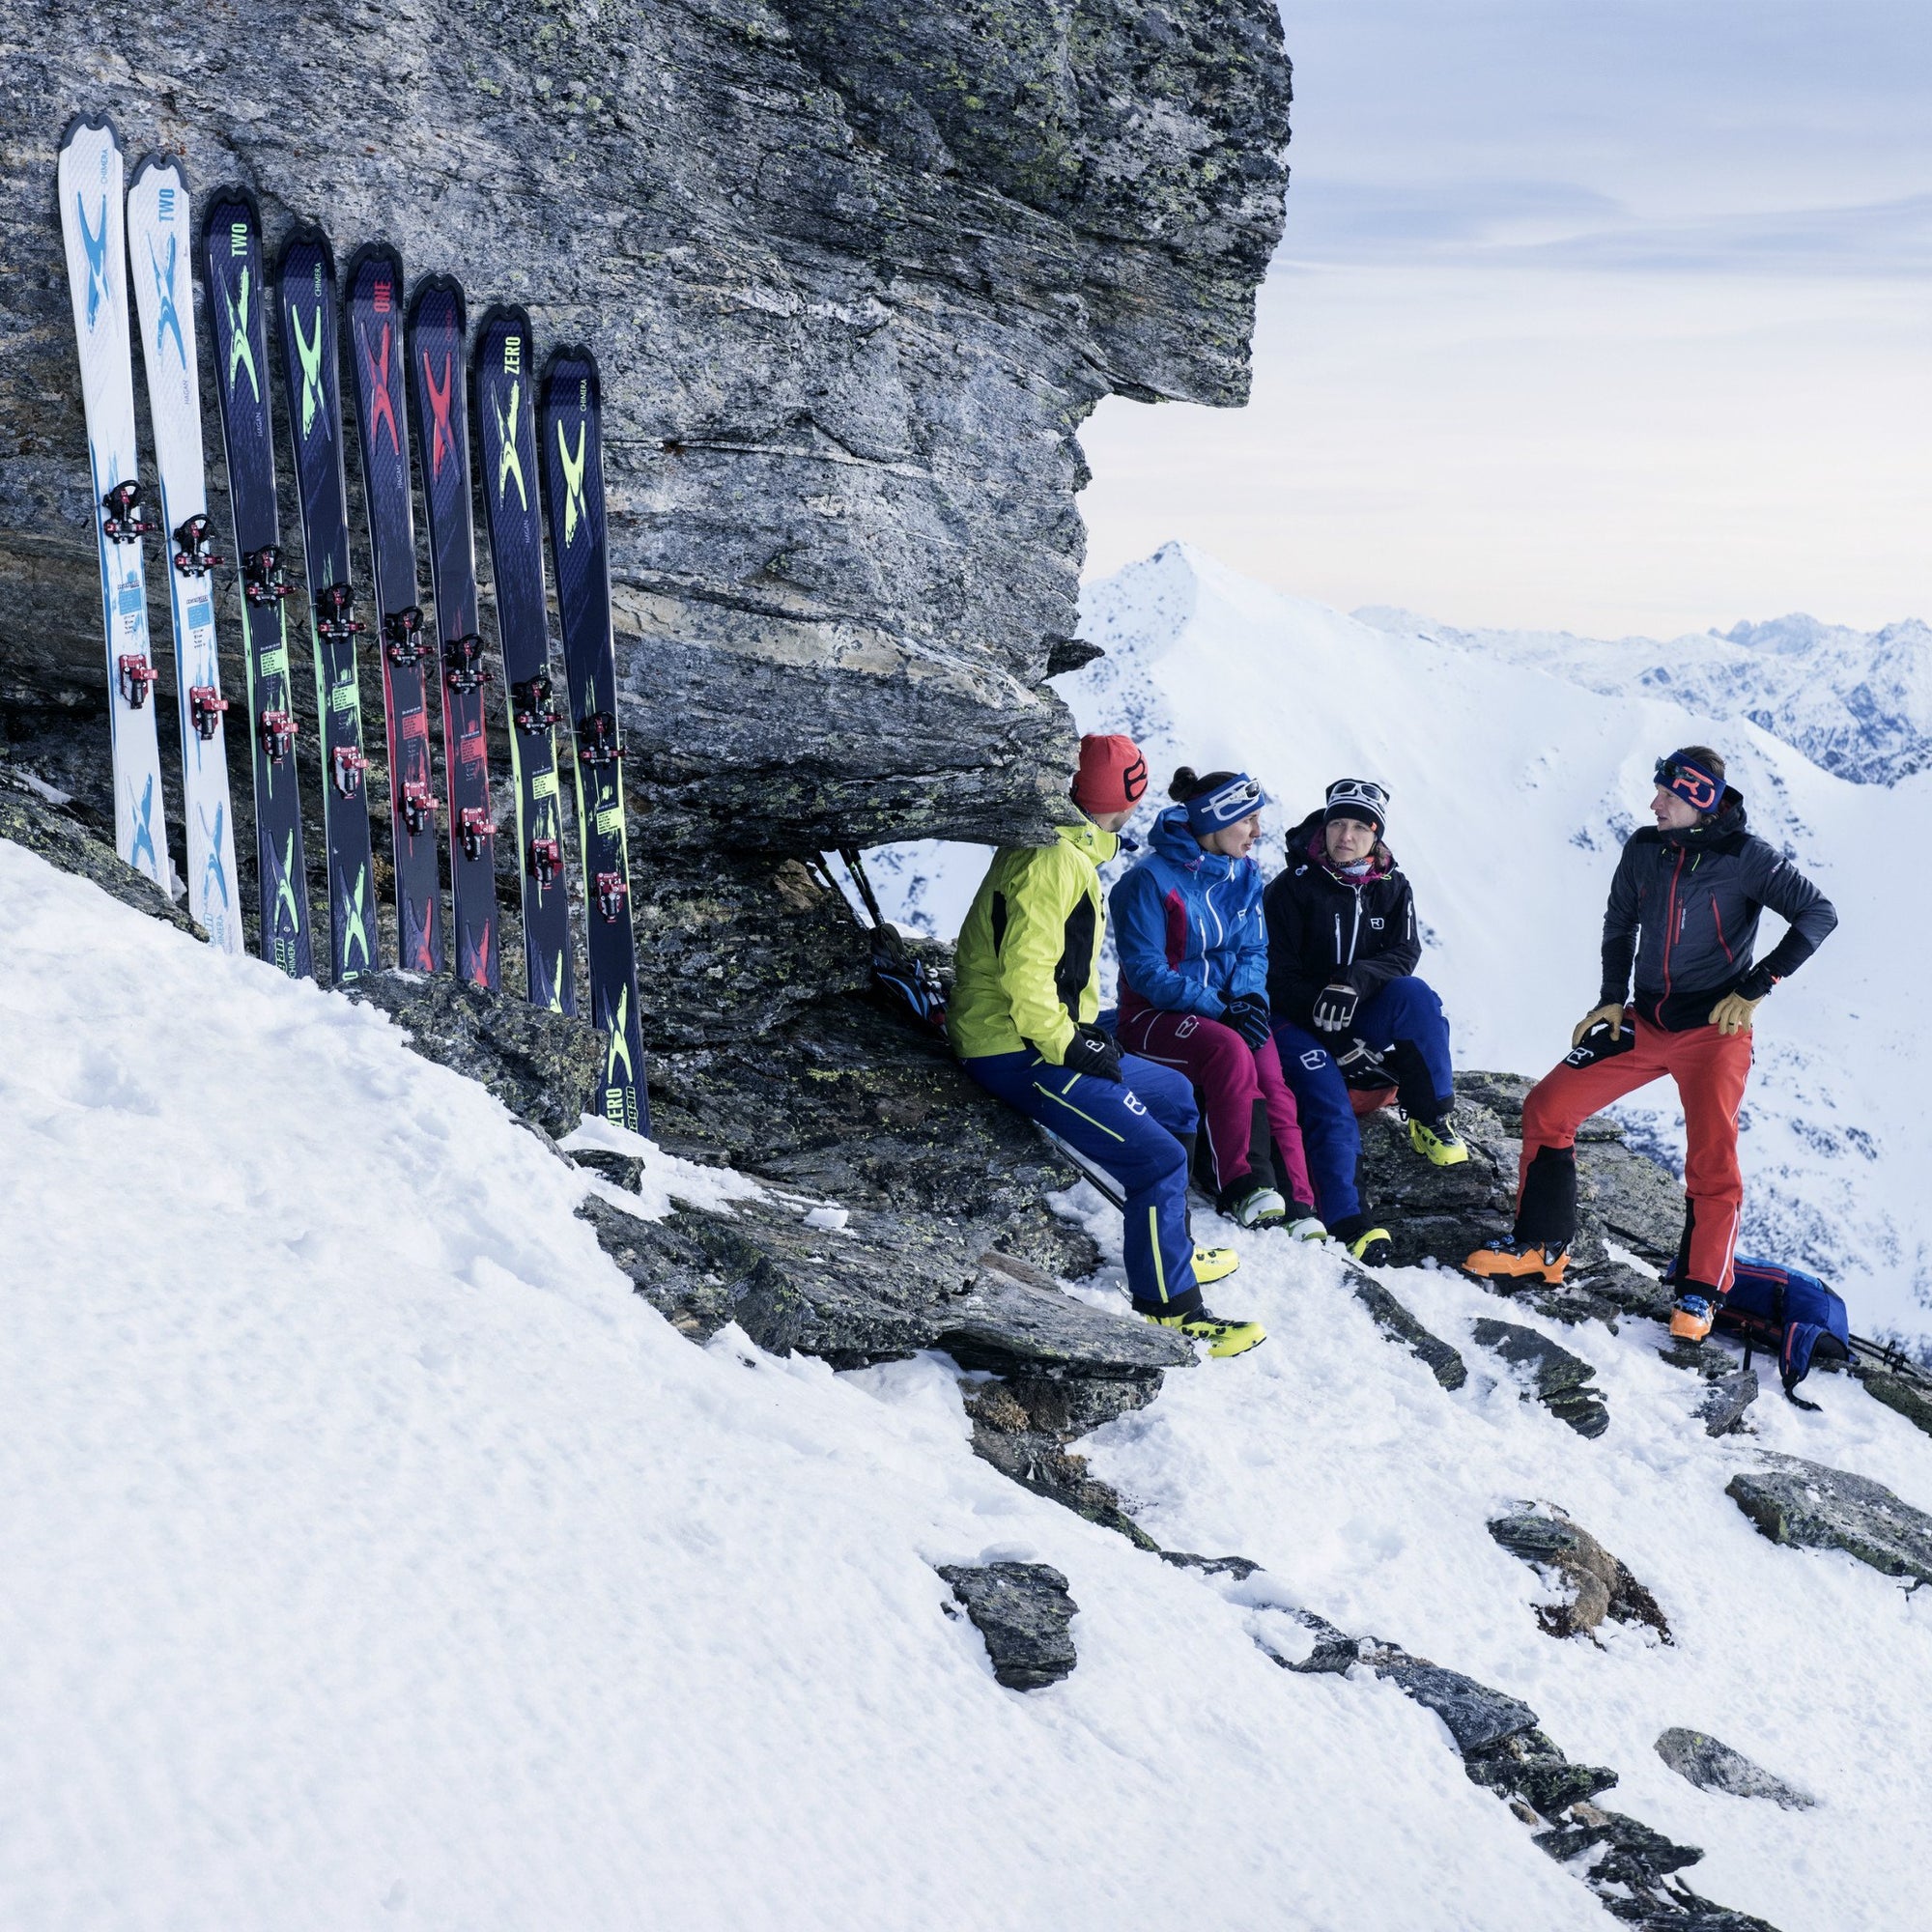 Chimera Two L, Skis - Hagan Ski Mountaineering Alpine Ski Touring Backcountry Gear